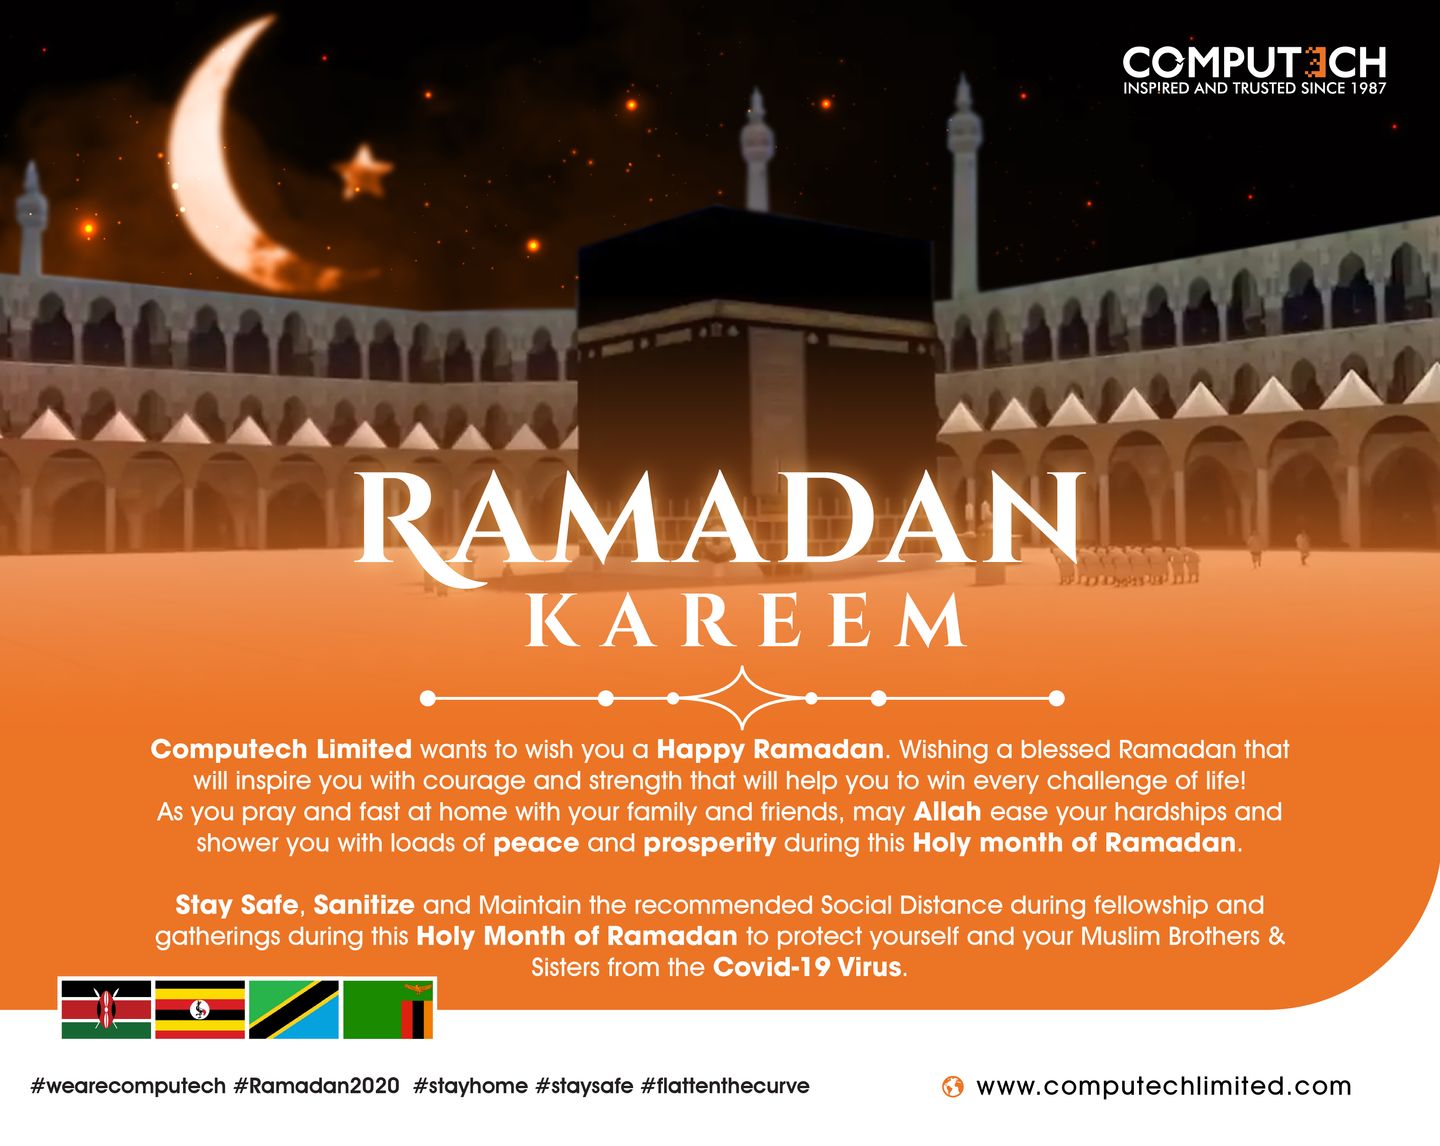 May the spirit of Ramadan light up your soul. Happy Ramadan!